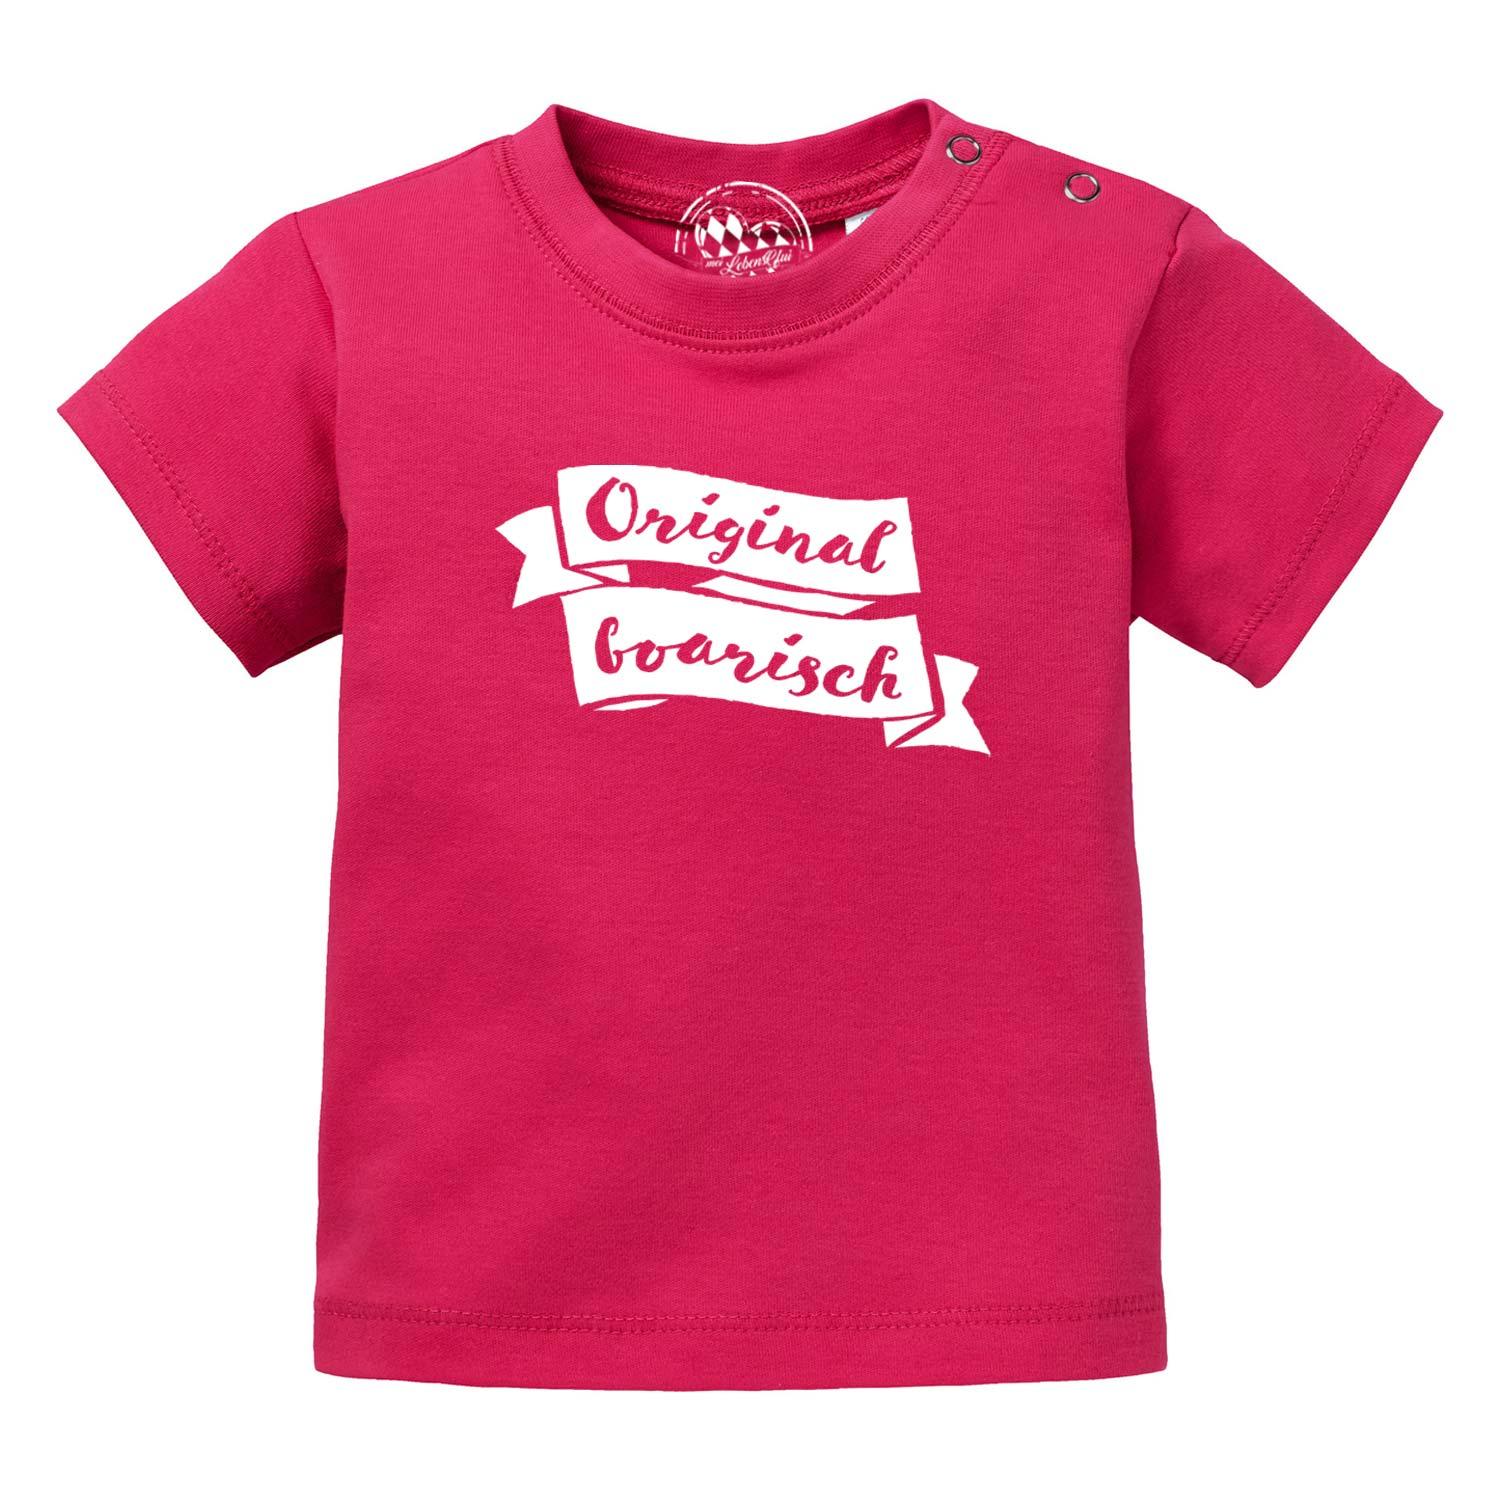 Baby T-Shirt "Original boarisch" - bavariashop - mei LebensGfui